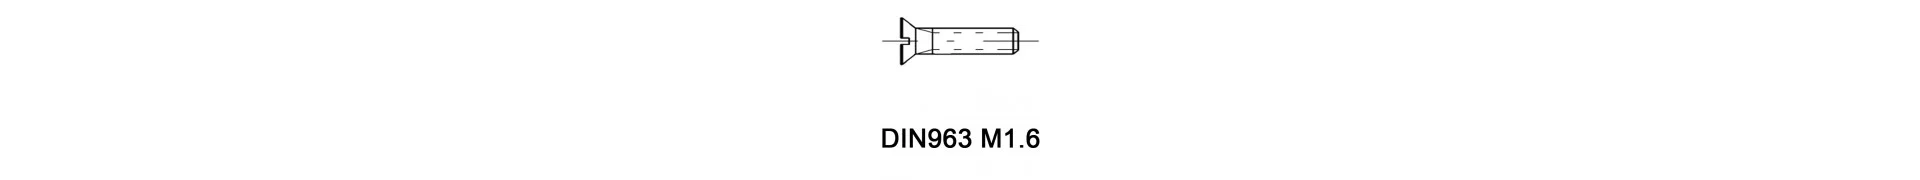 DIN963 M1.6